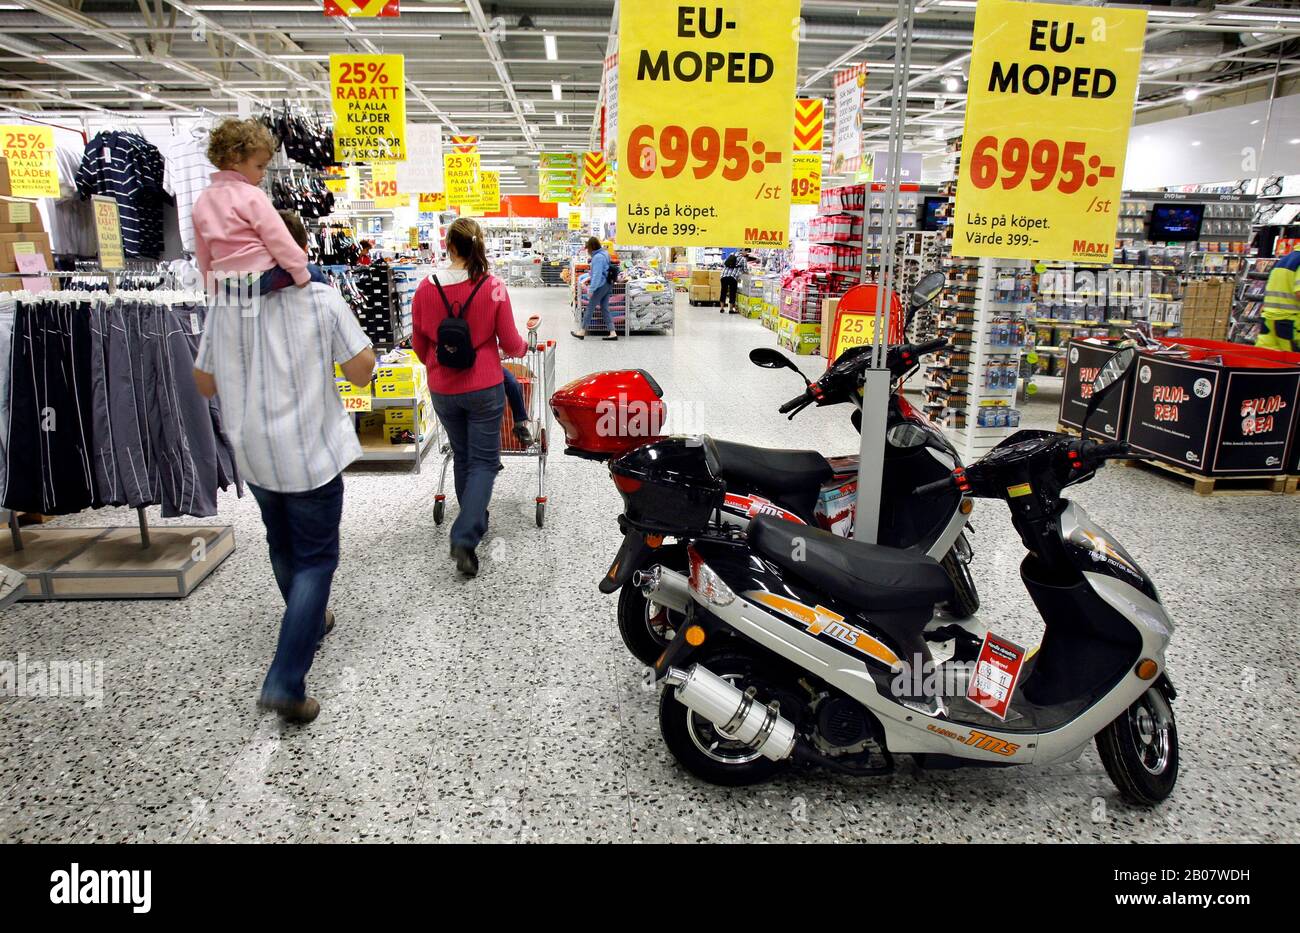 Sales of EU mopeds. Photo Jeppe Gustafsson Stock Photo - Alamy